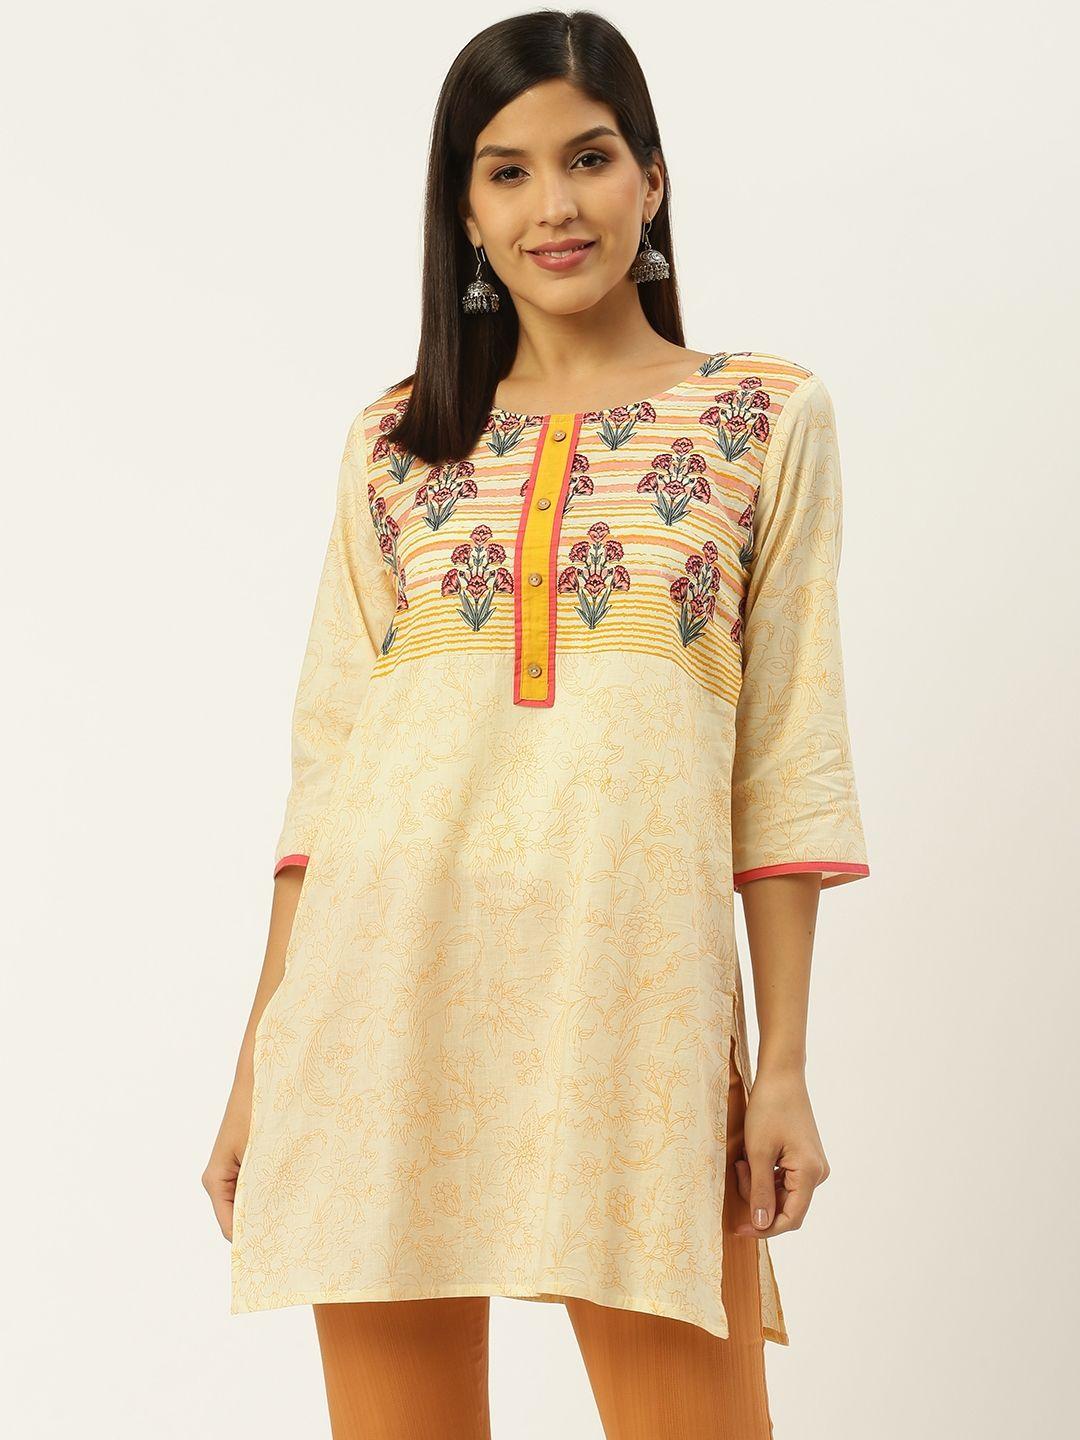 rangmayee-women-cream-coloured-&-orange-printed-tunic